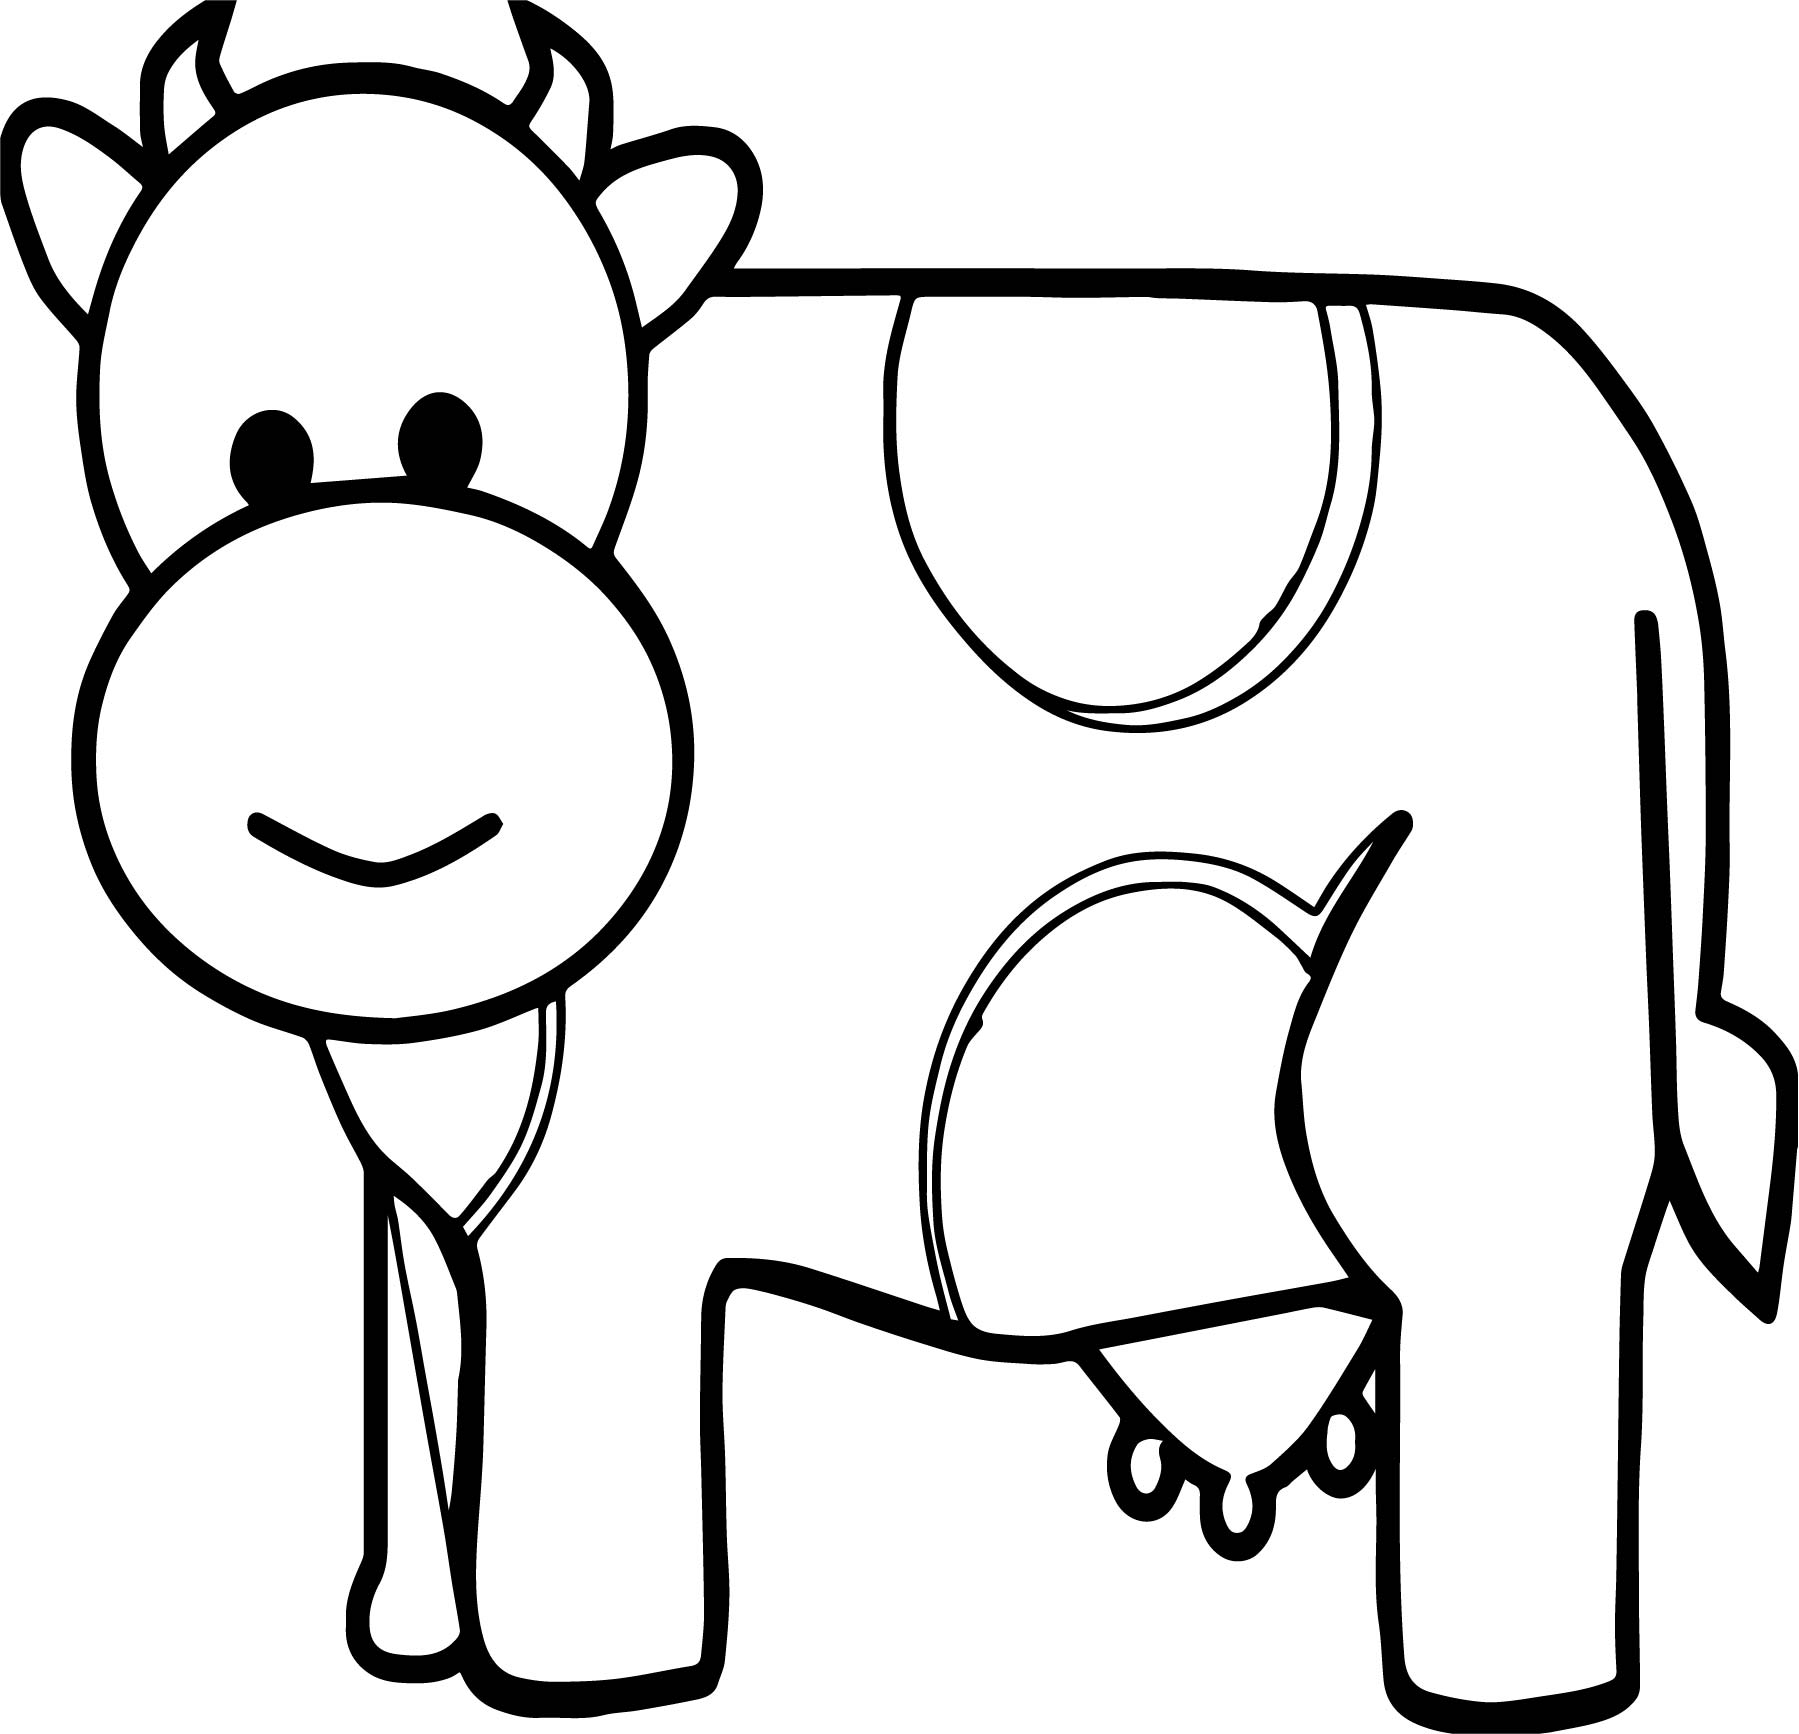 Baby Cow Farm Animal Coloring Page - Wecoloringpage.com